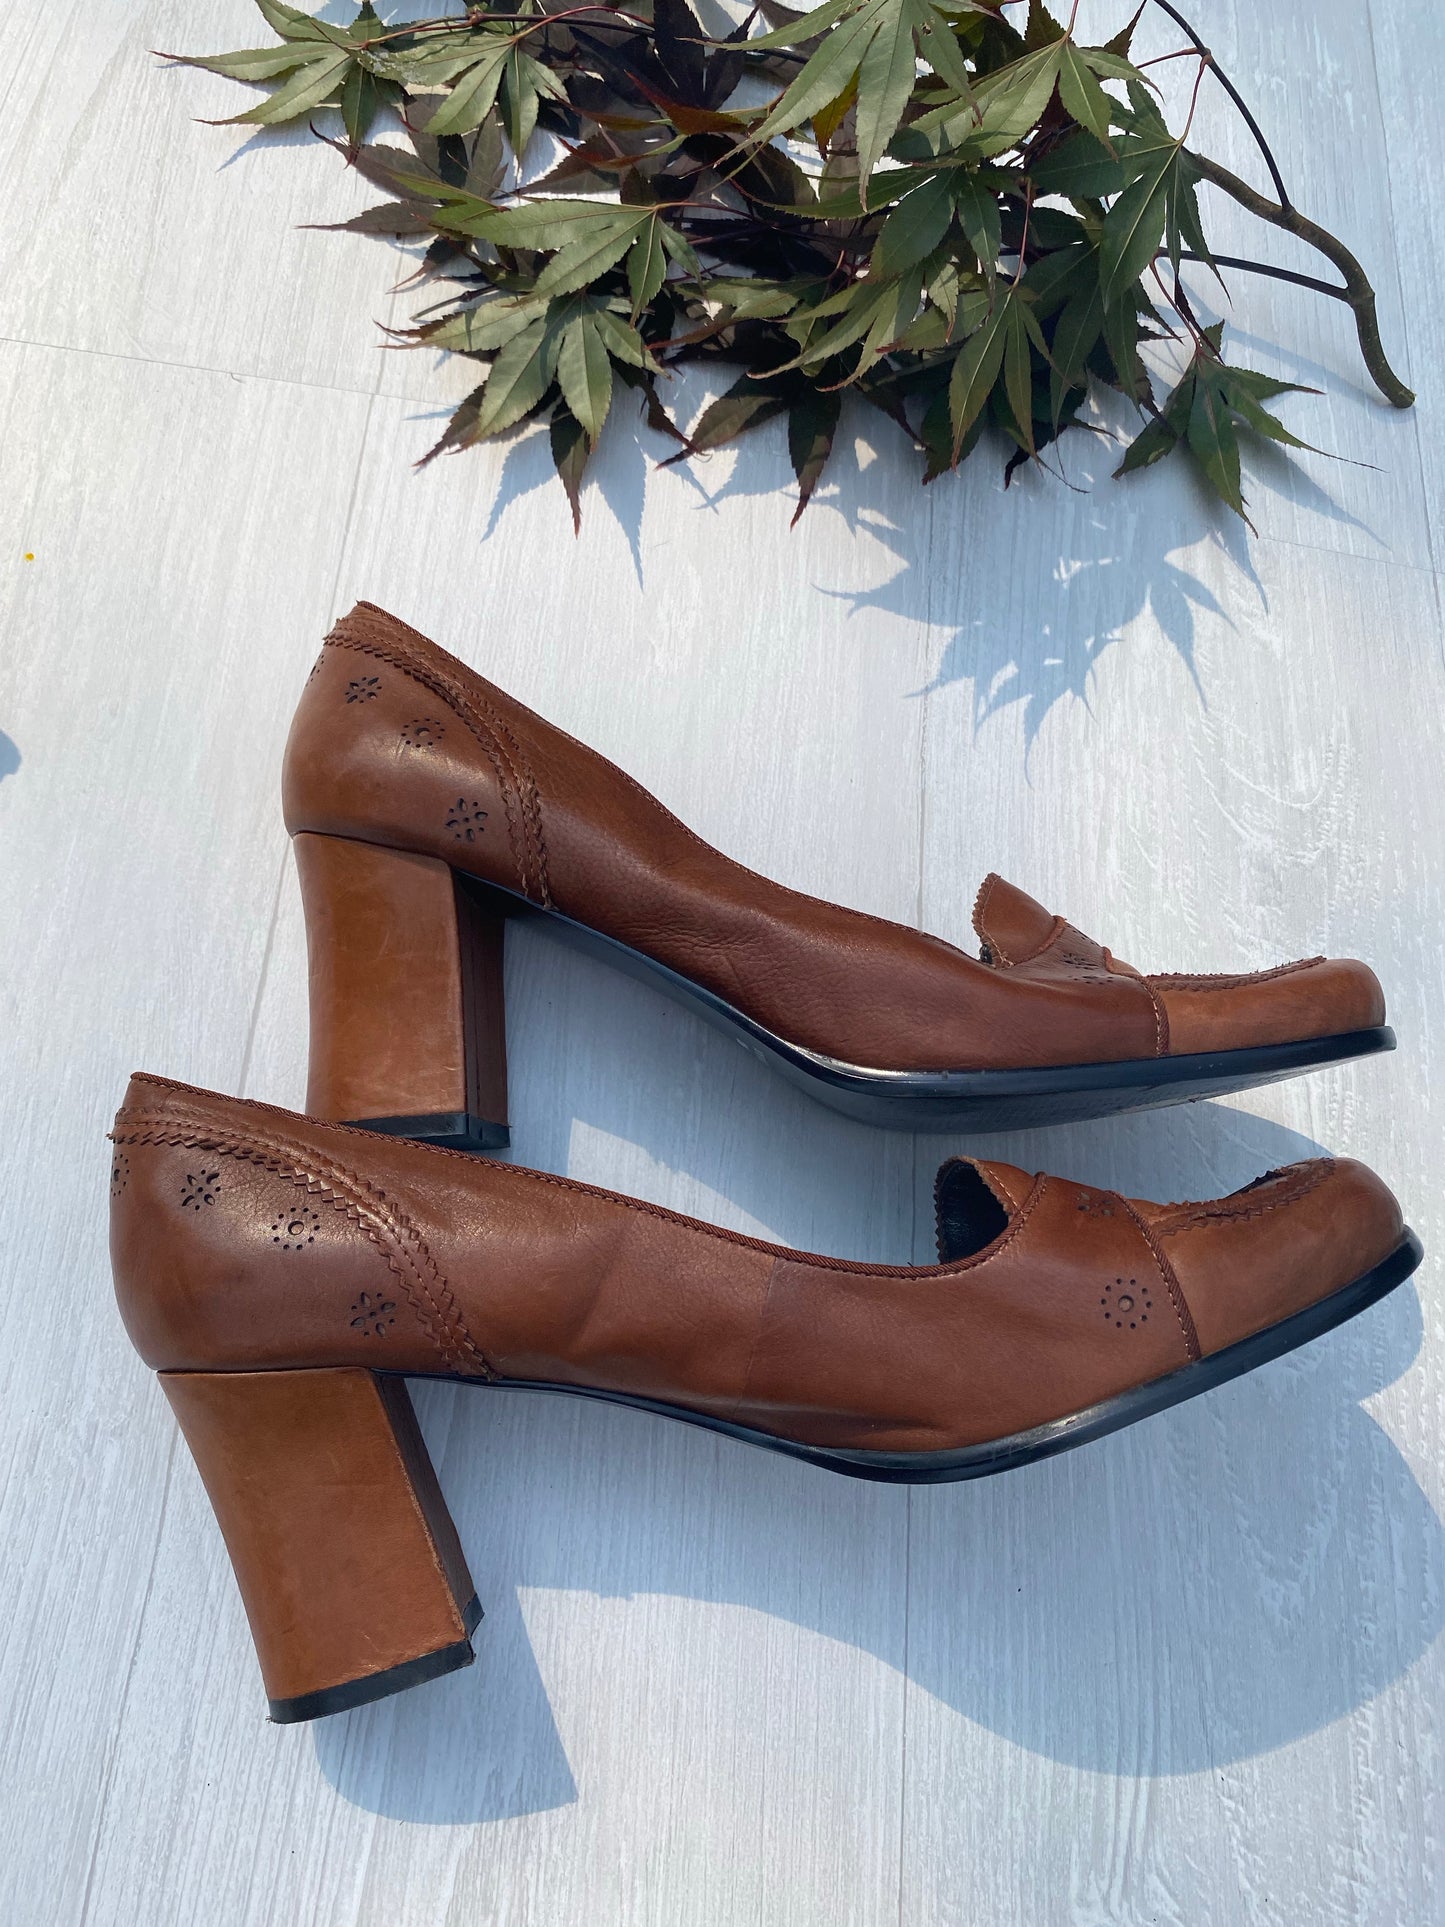 GUC ~ Nine West “Carmi” Tan Leather Block Heels ~ Size 10M